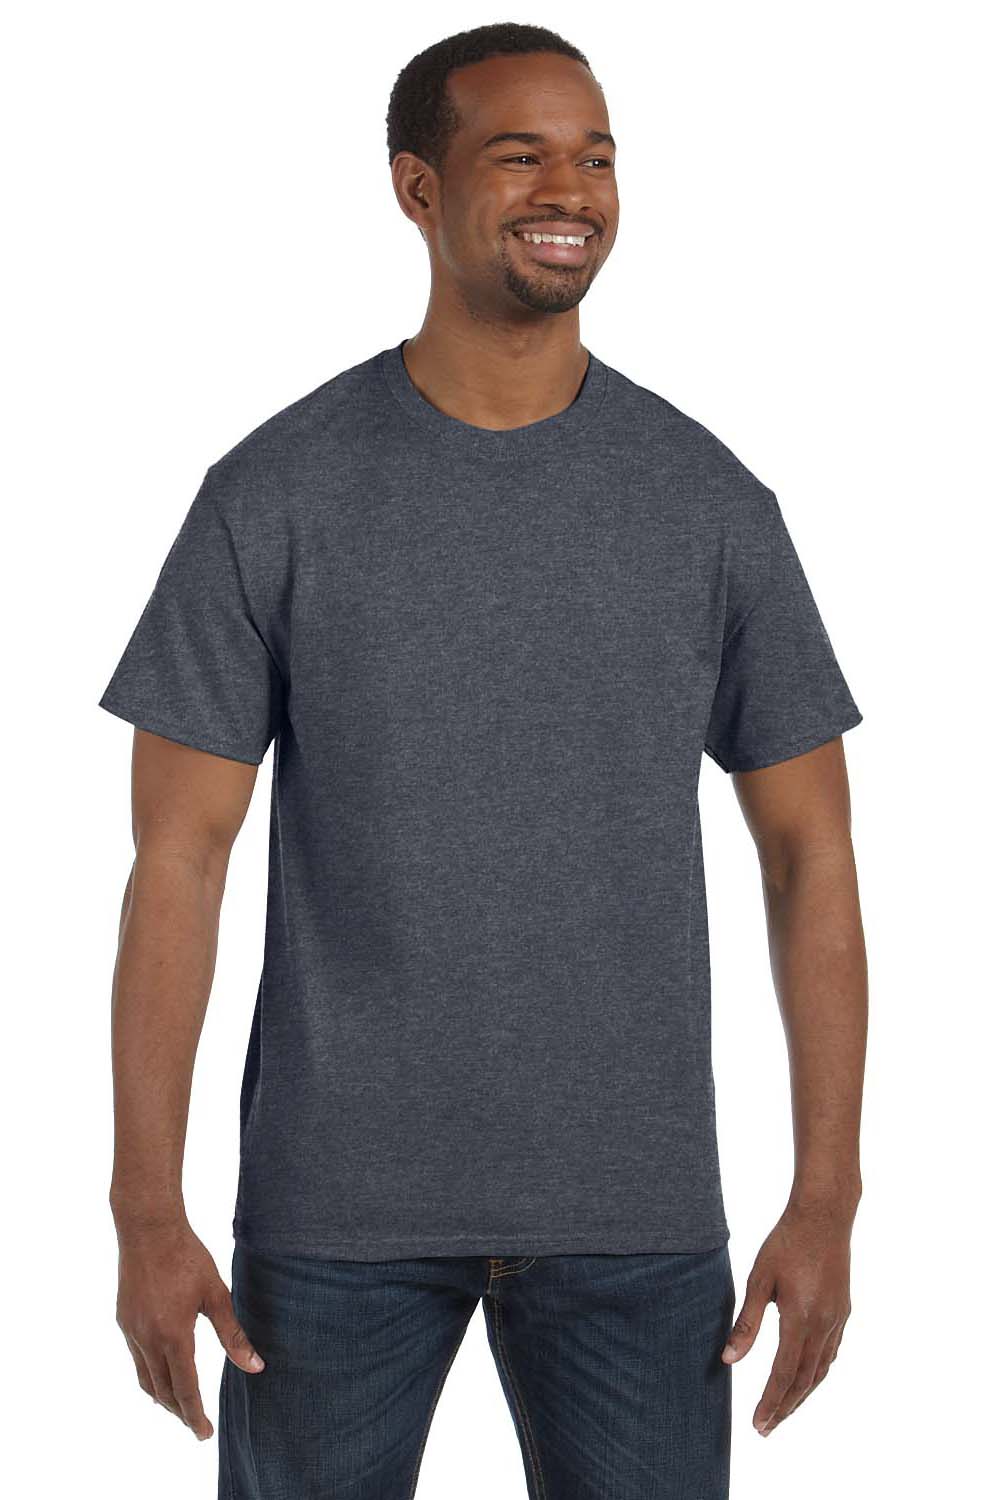 Hanes 5250T Mens ComfortSoft Short Sleeve Crewneck T-Shirt Heather Charcoal Grey Front